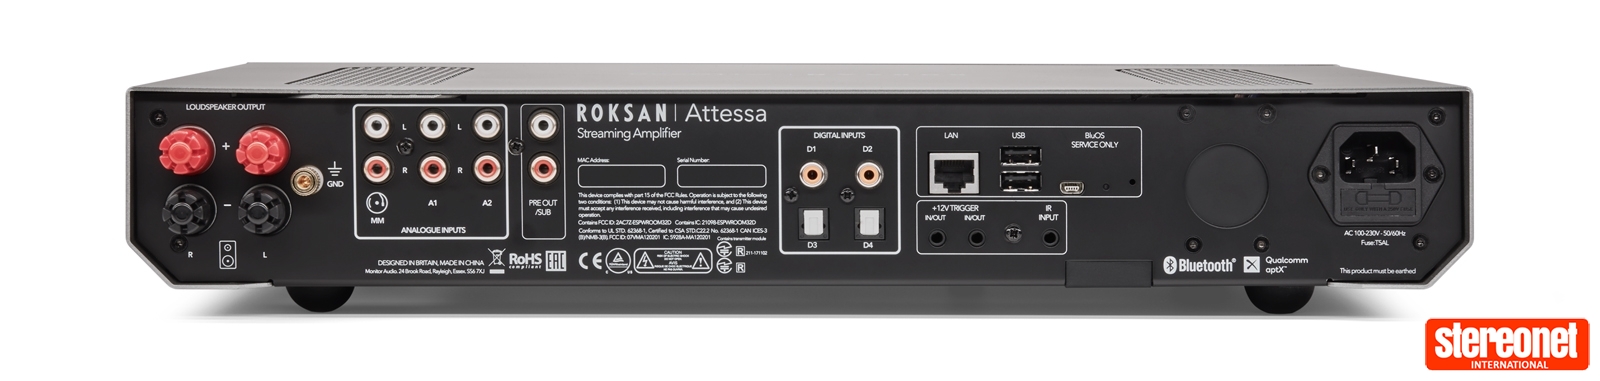 Roksan Attessa Streaming Amplifier Review